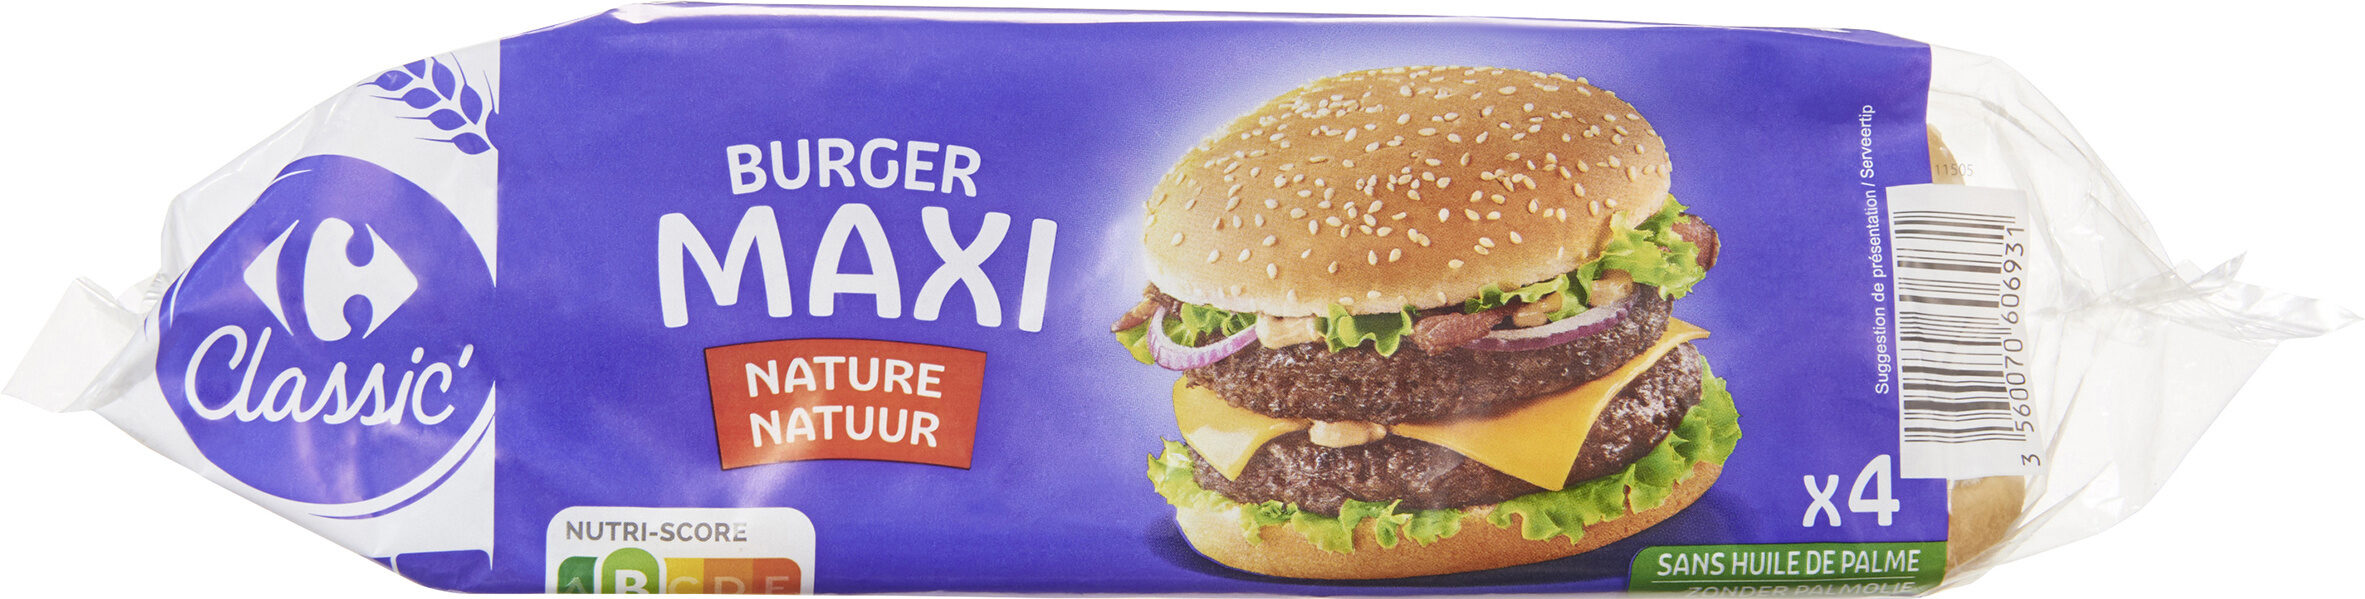 Burger maxi nature - Prodotto - fr